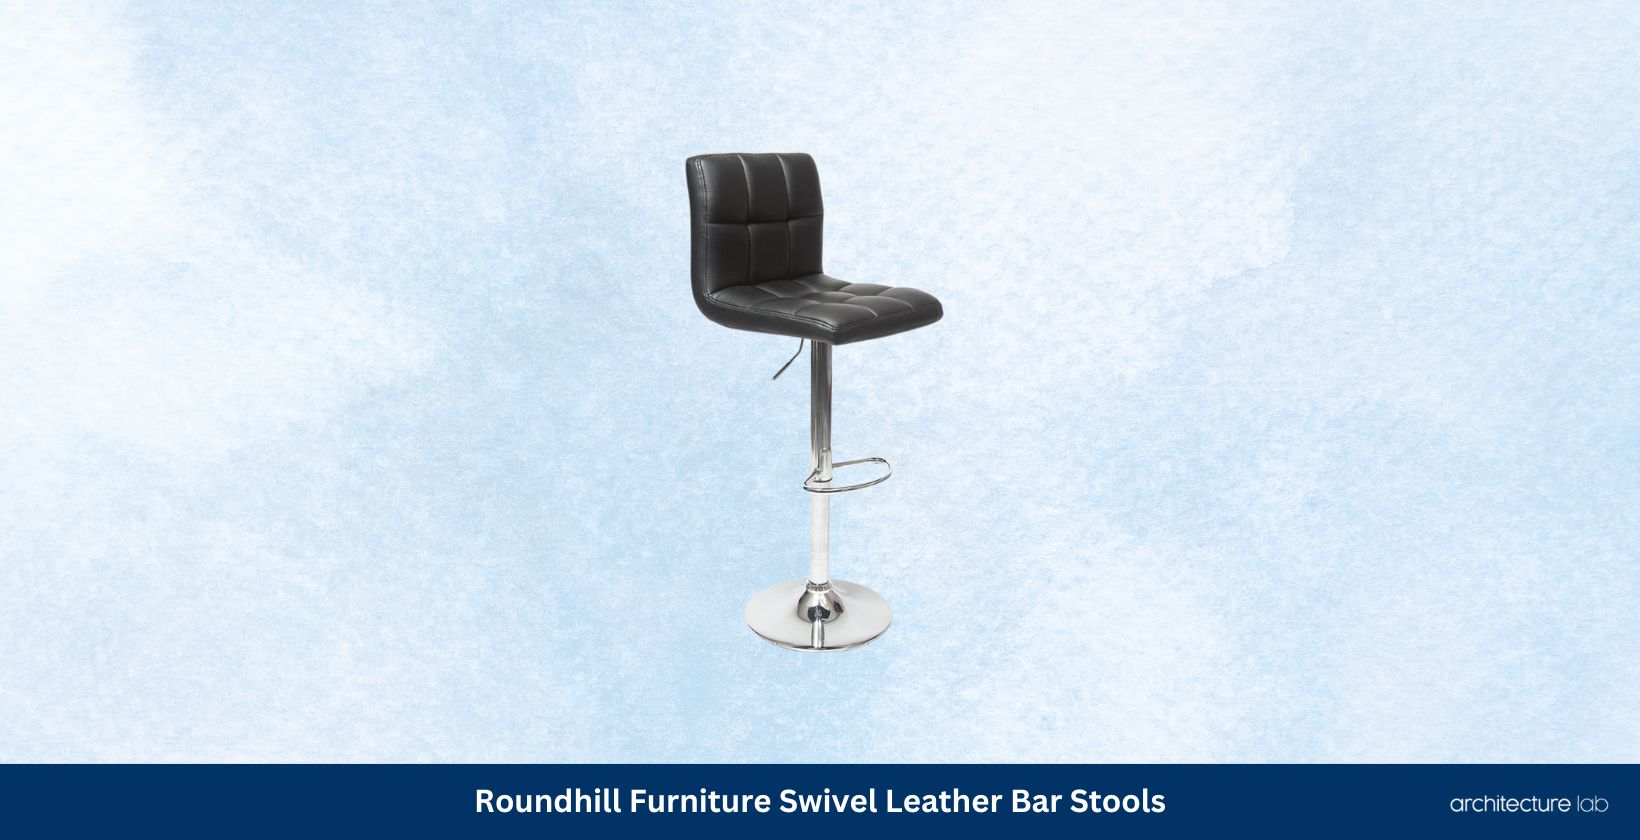 Roundhill furniture swivel leather bar stools